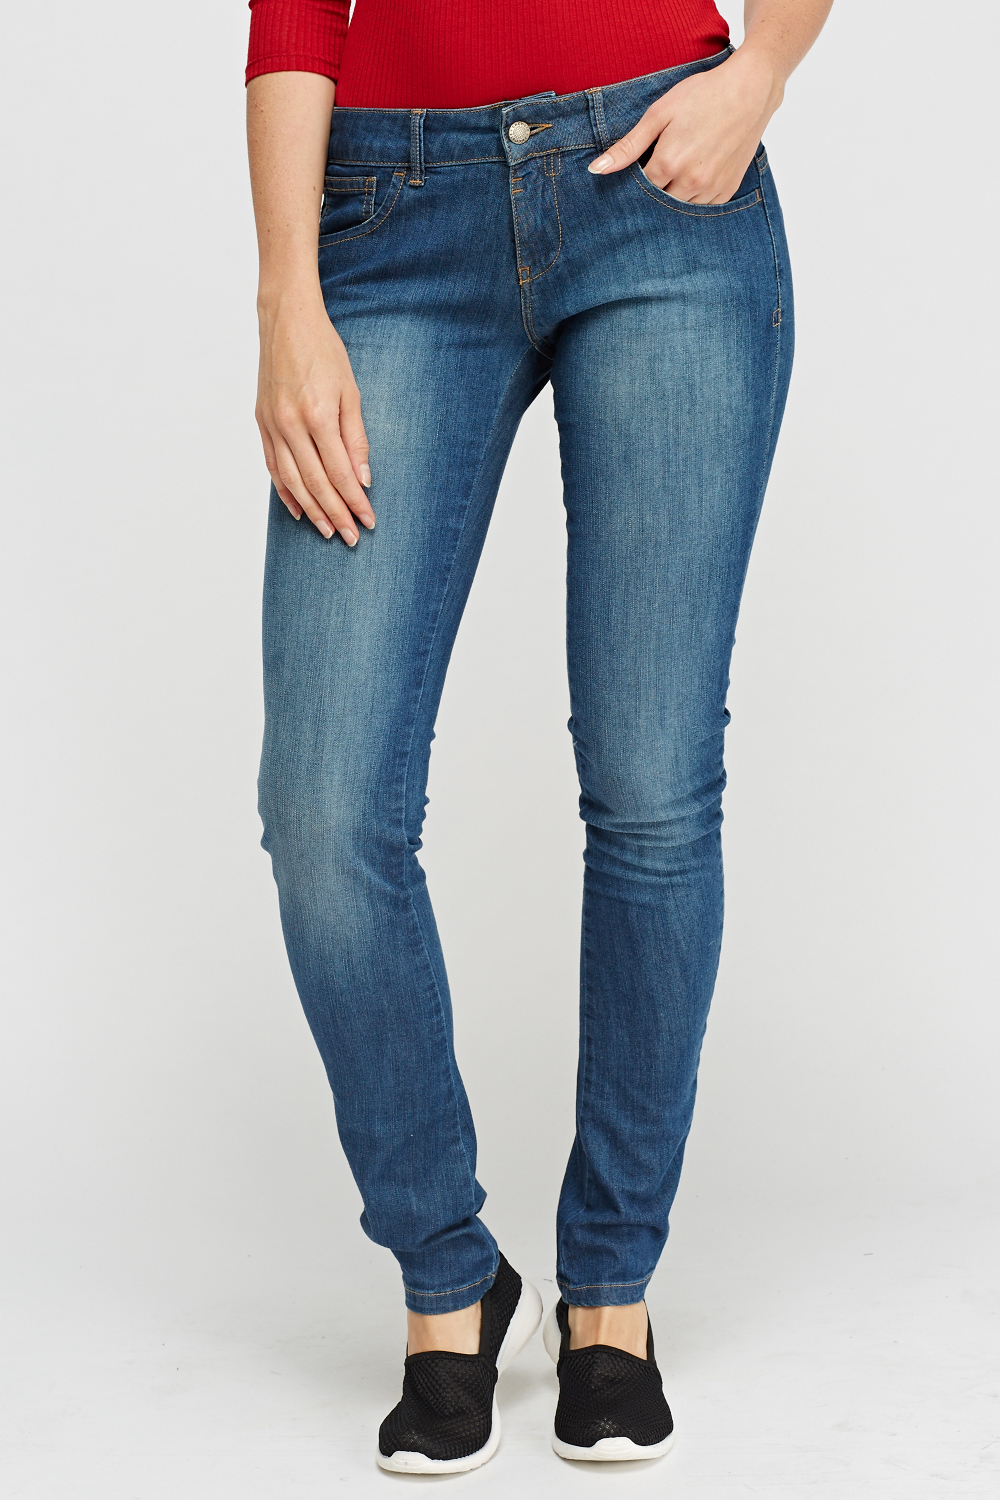 Lacoste Denim Blue Jeans - Limited edition | Discount Designer Stock